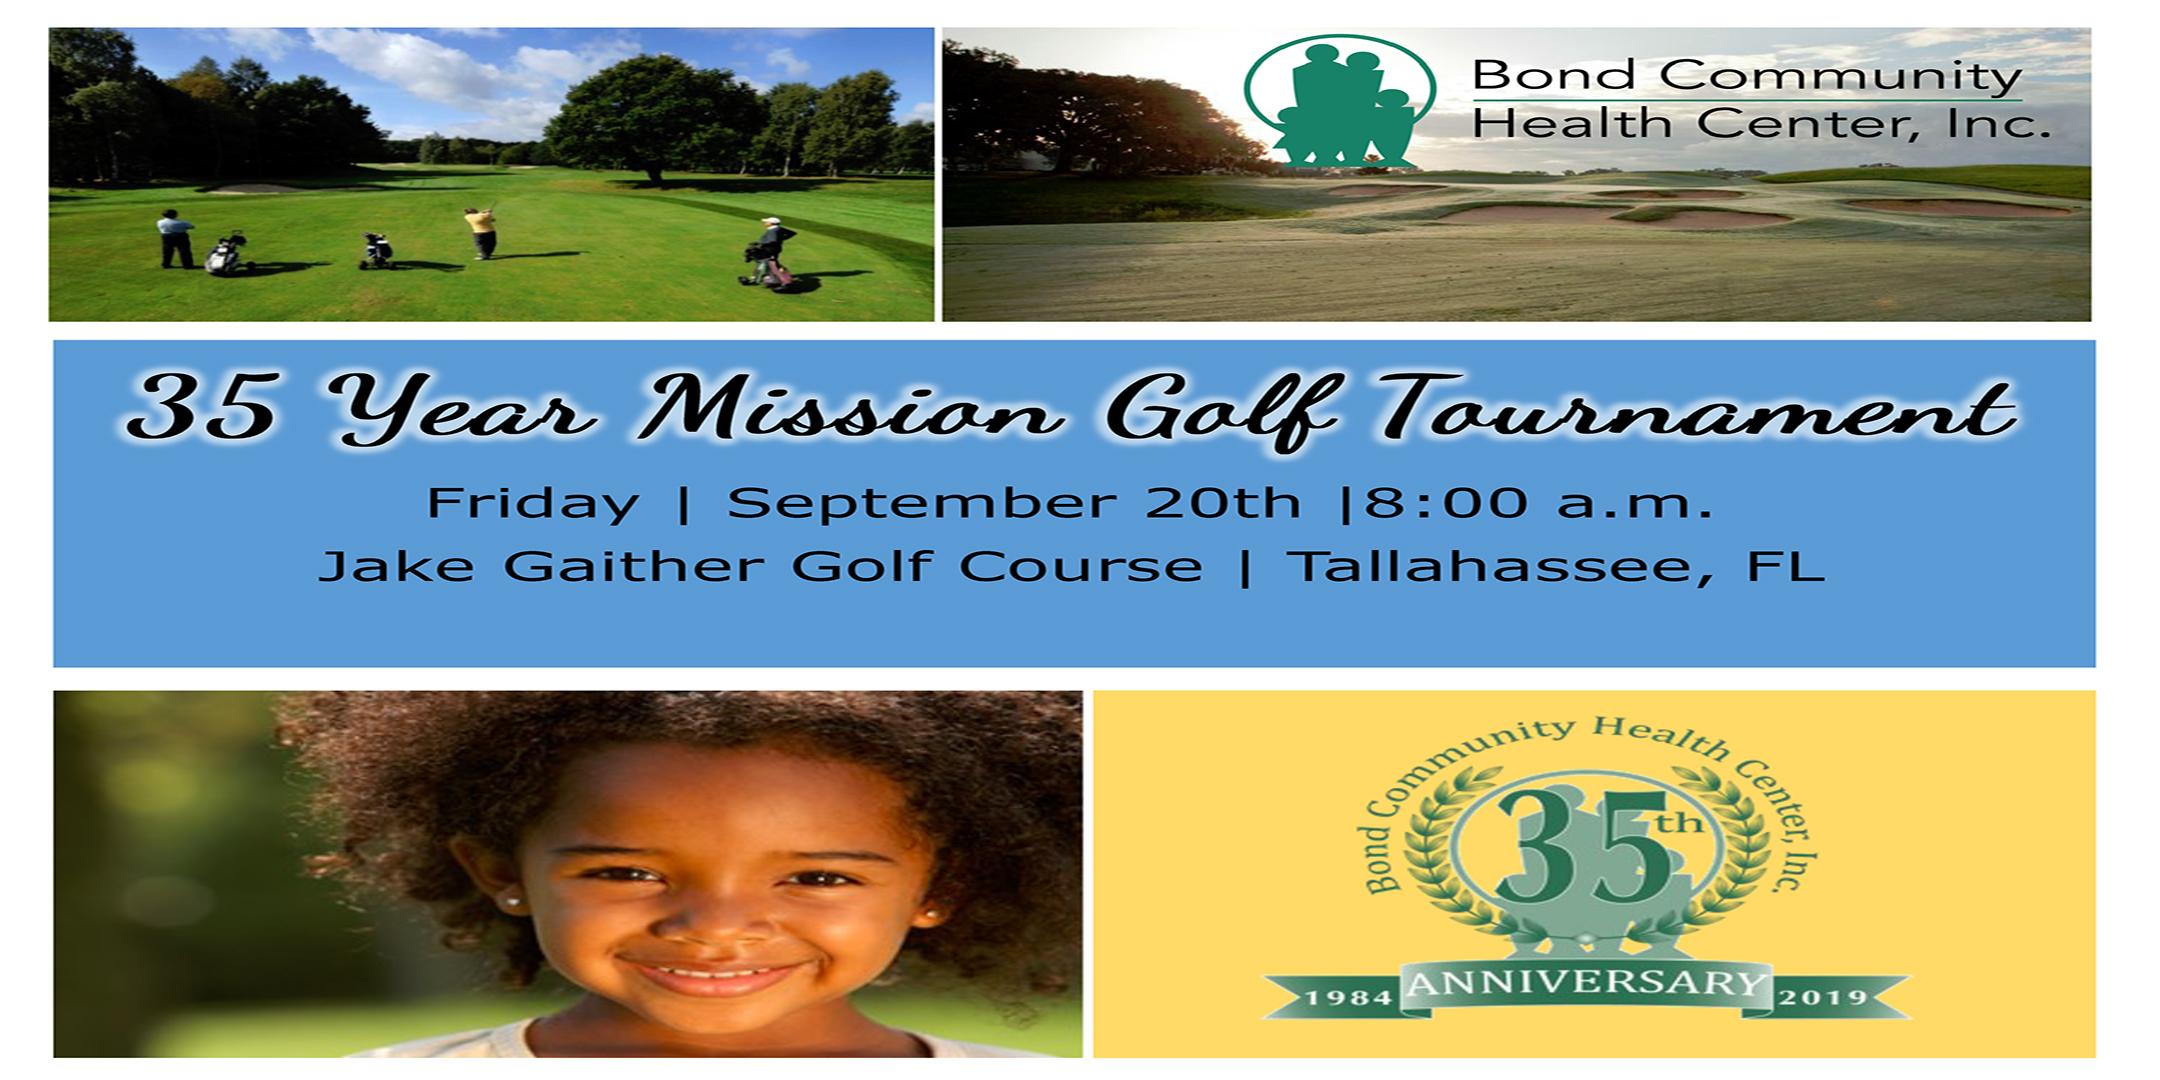 35 Year Mission Golf Tournament